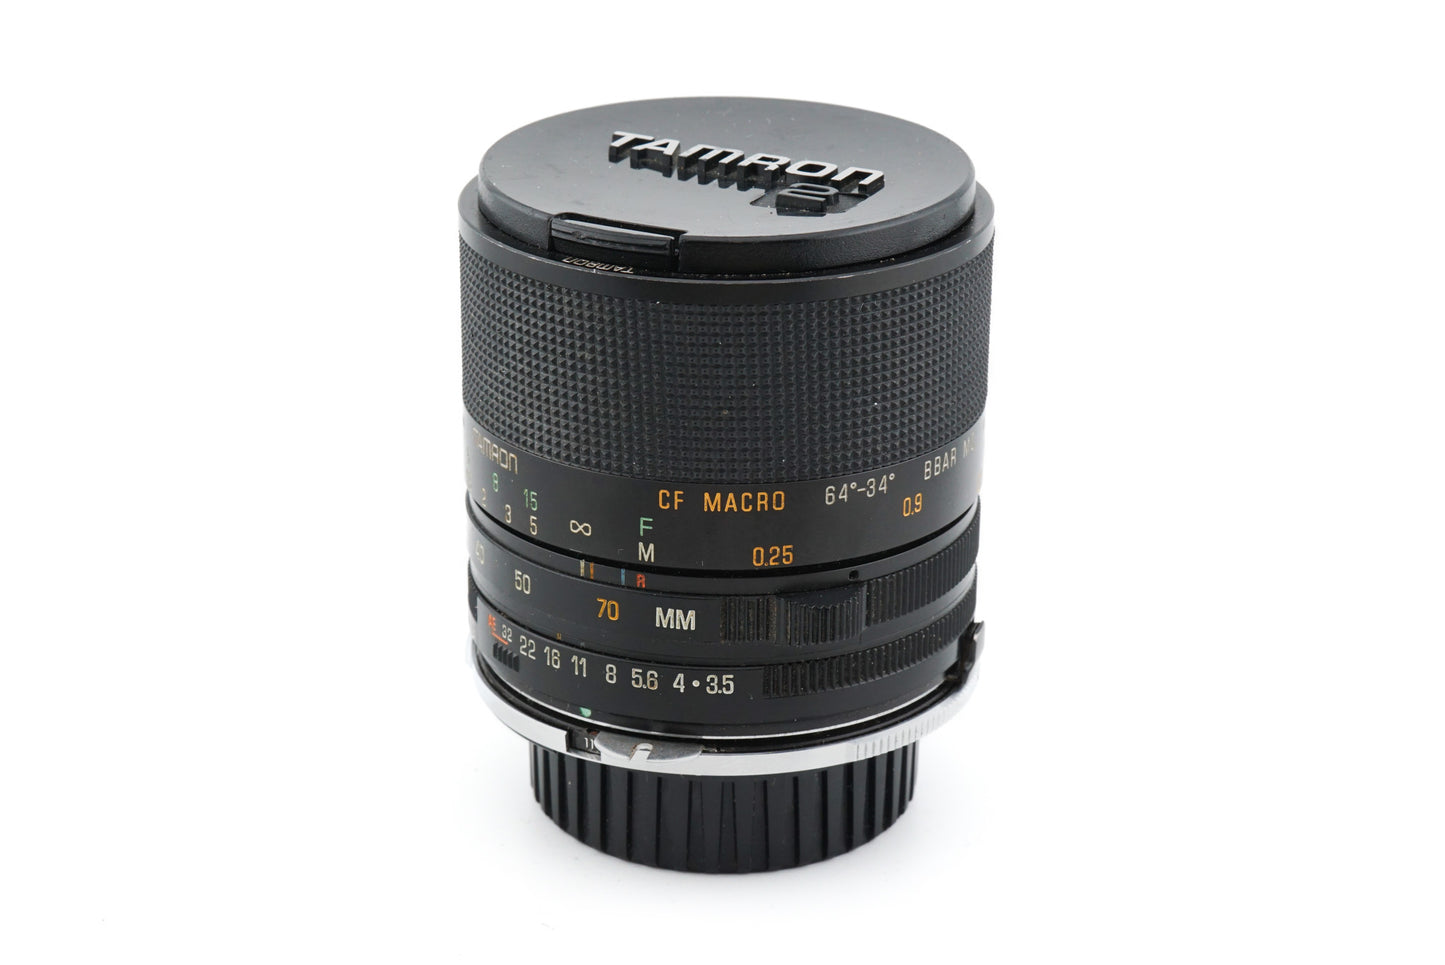 Tamron 35-70mm f3.5-4.5 CF Macro BBAR MC - Lens